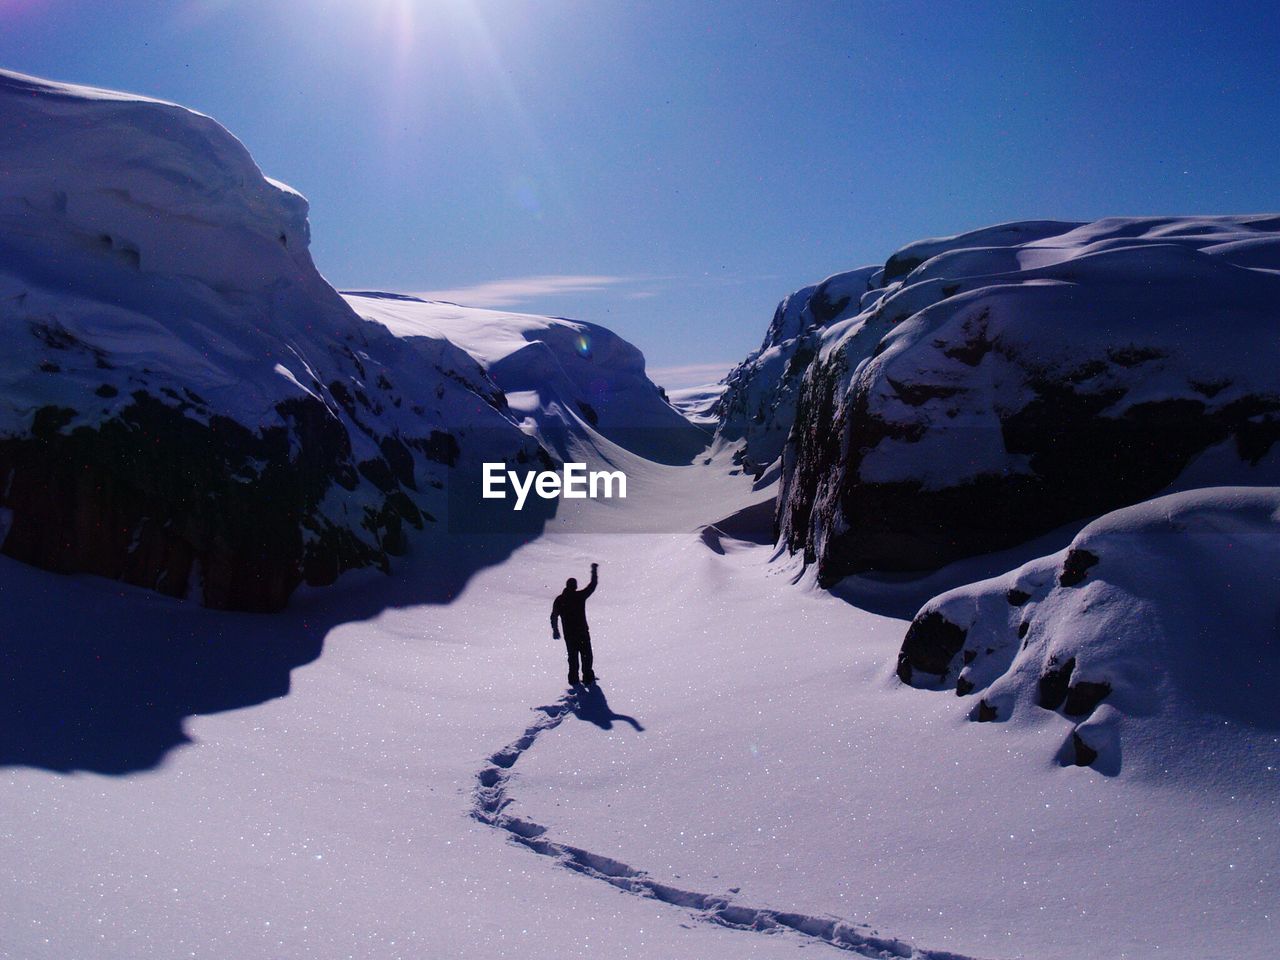 Tourist on snow covered mountain